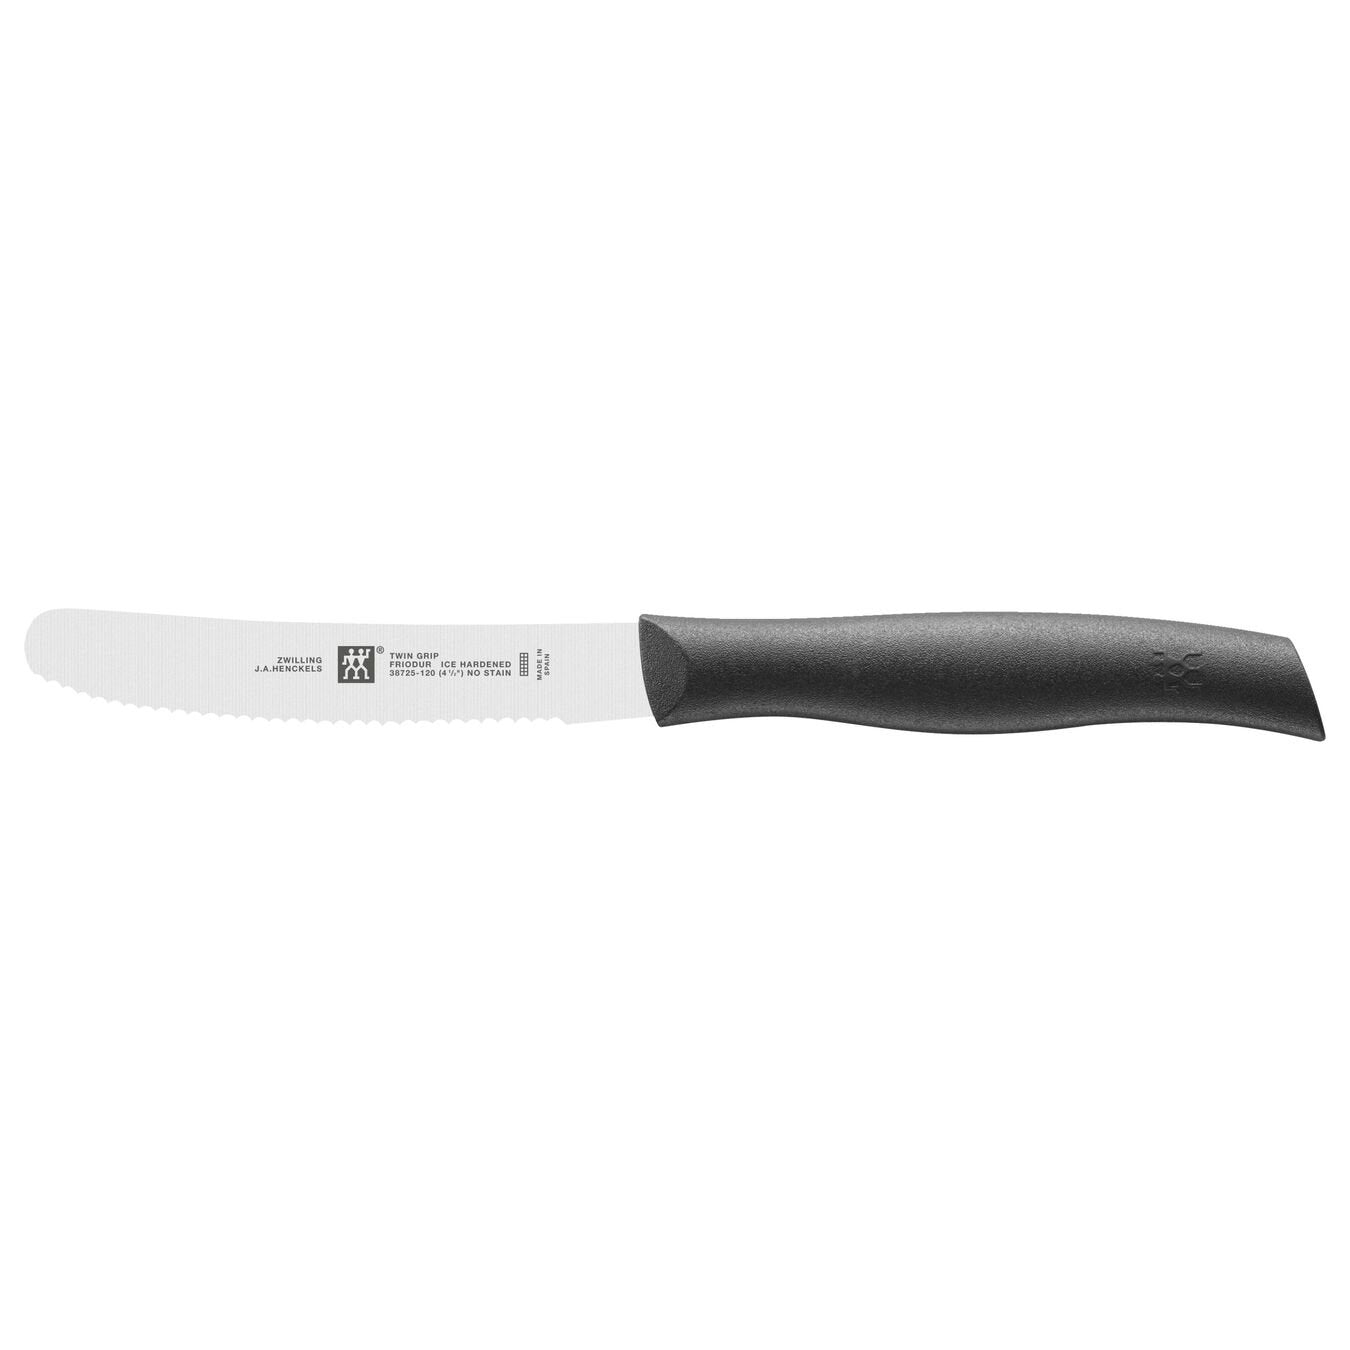 black handled serrated knife on white background